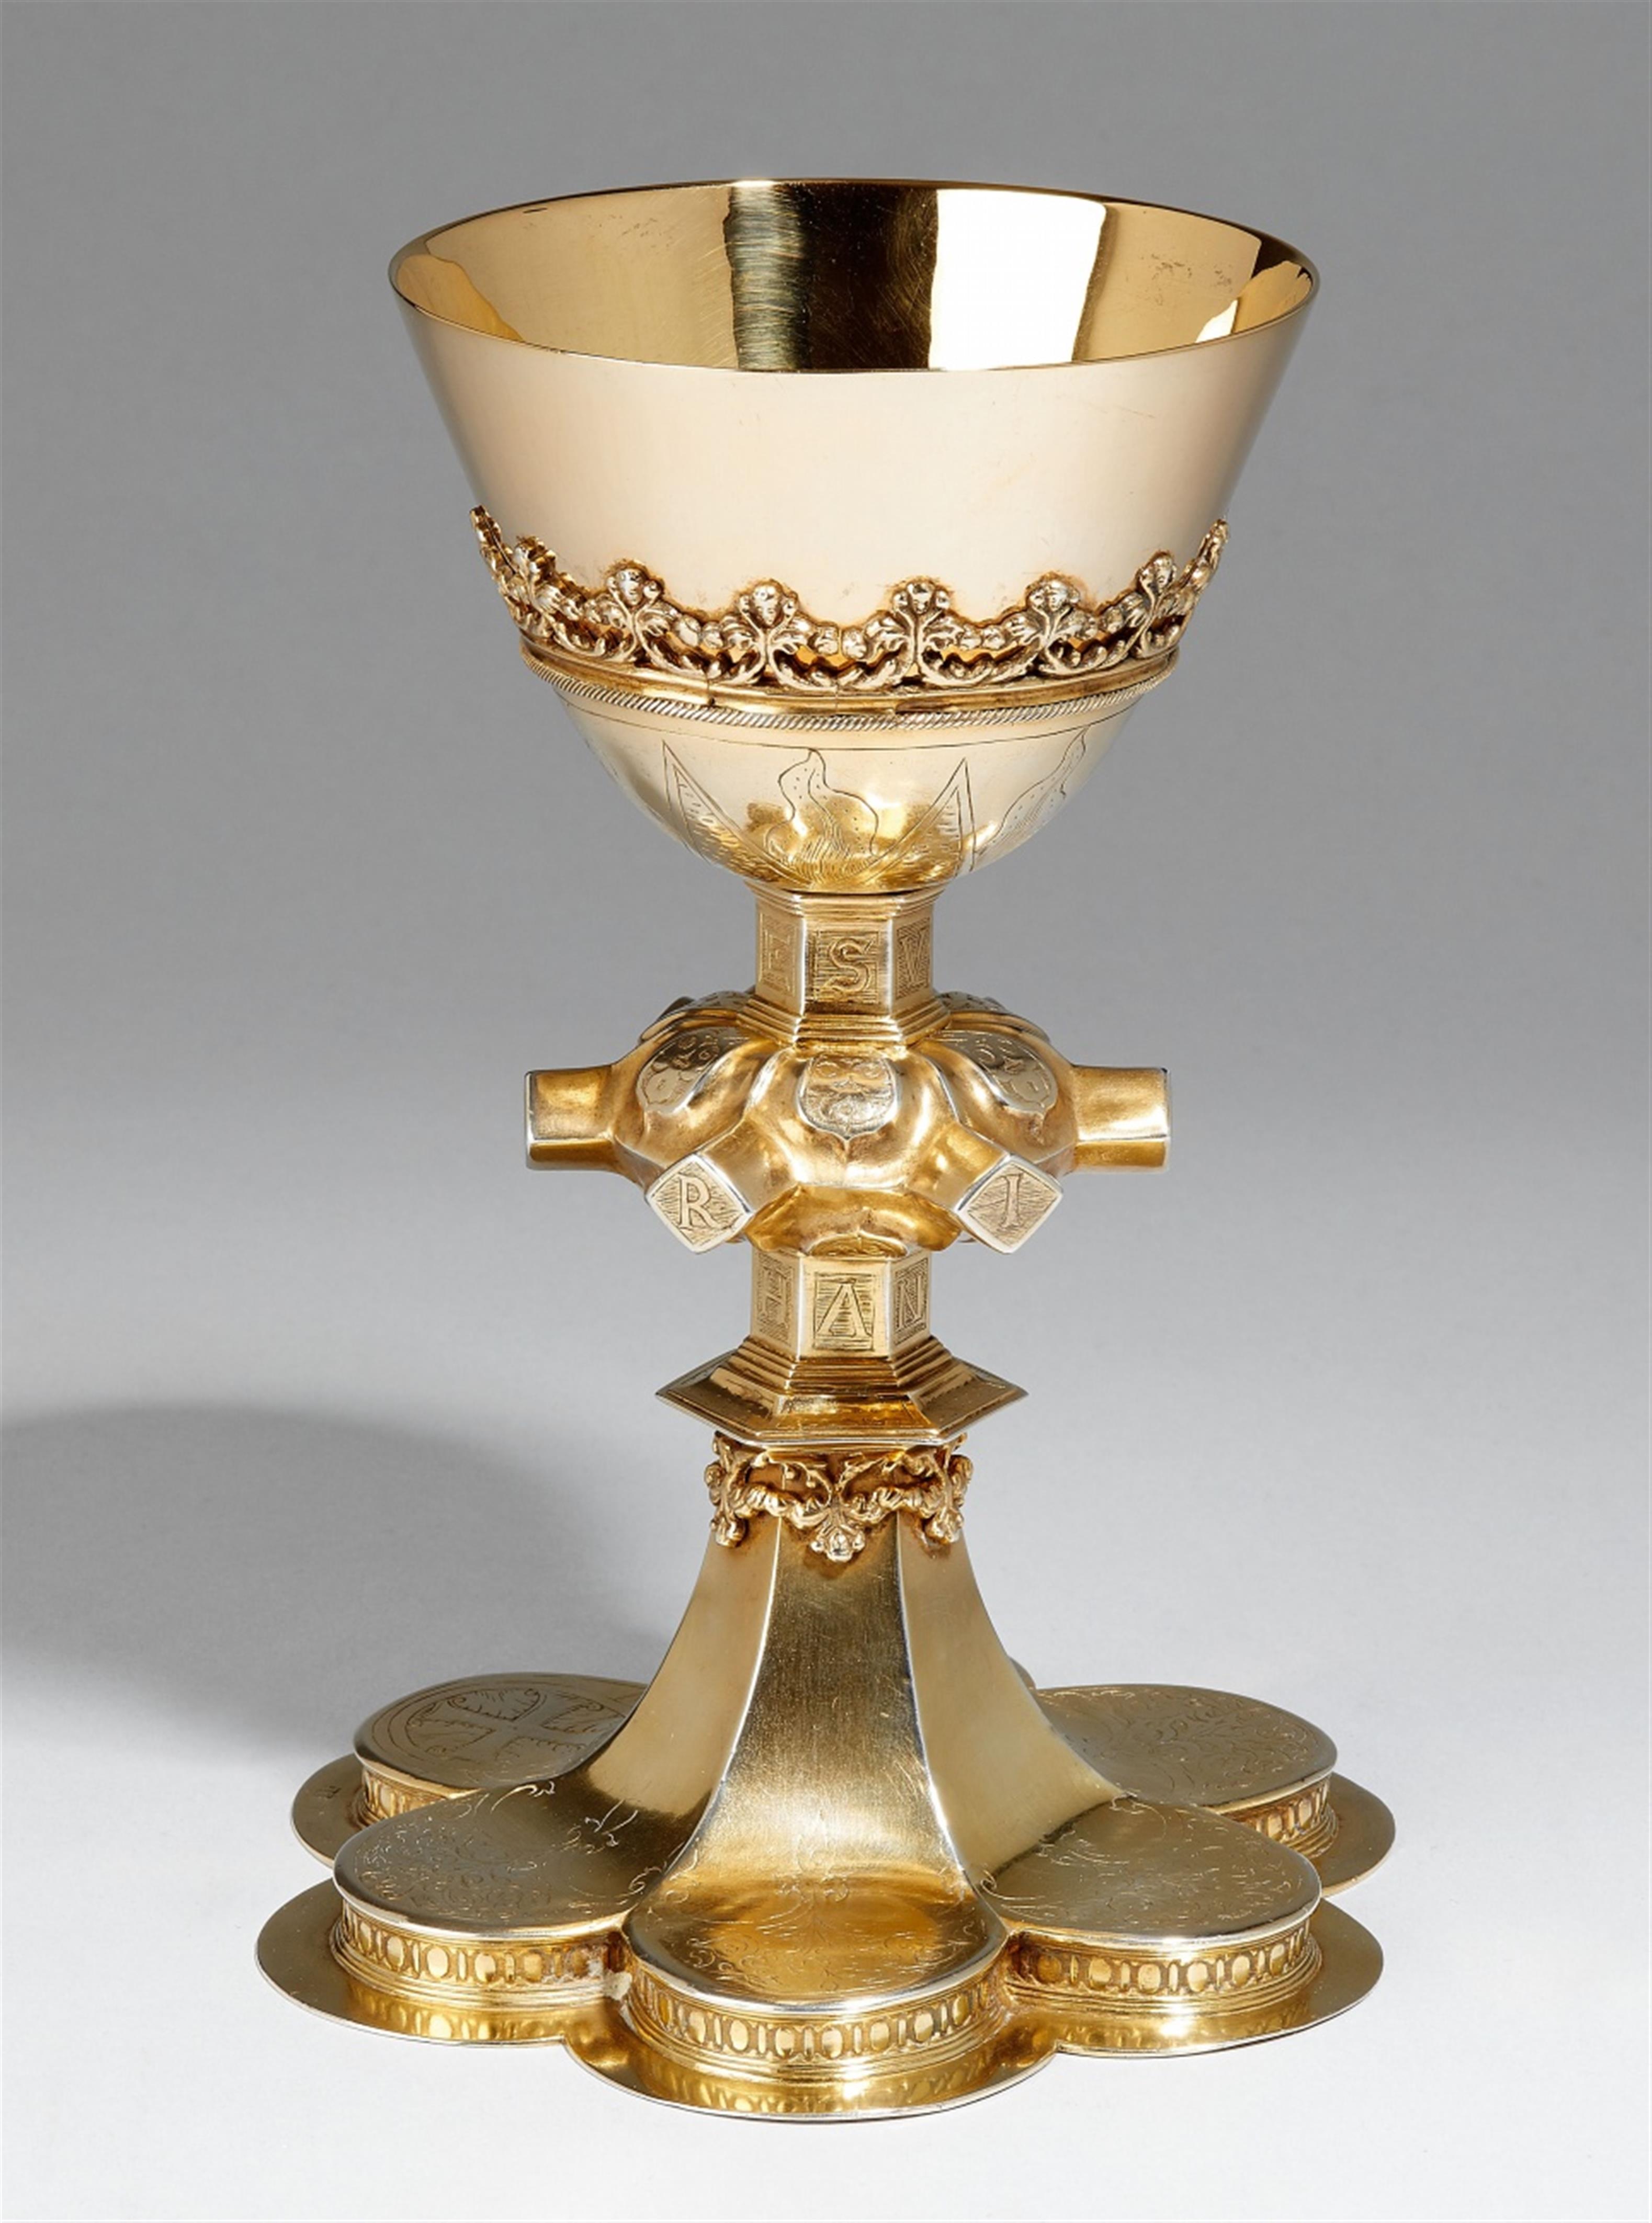 A German silver gilt communion chalice. Unidentified hallmark and maker's mark "IG". Presumably 1st half 17th C. - image-1